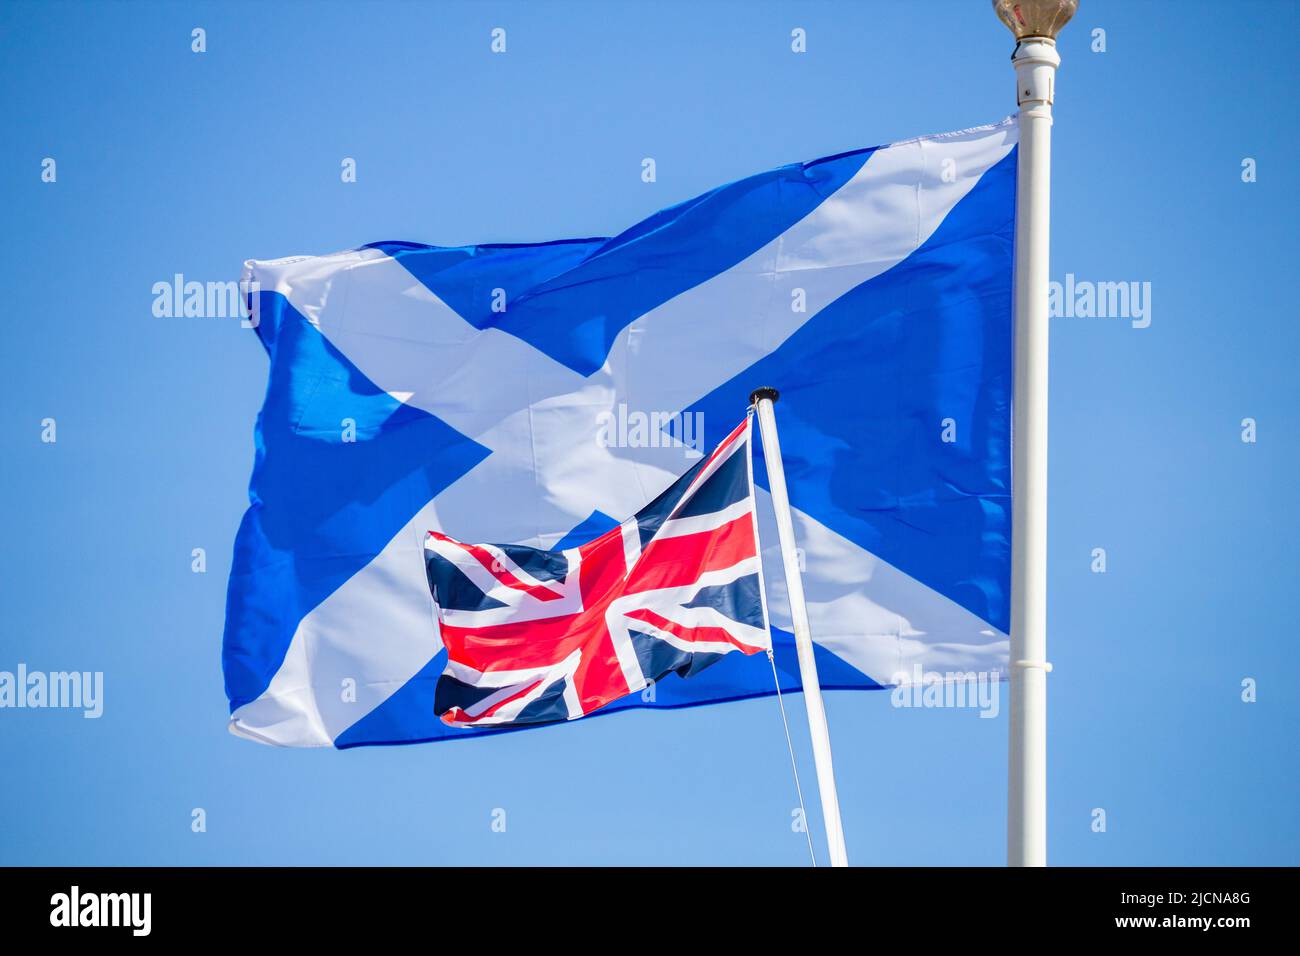 Scotland independence, hard border... concept image Stock Photo